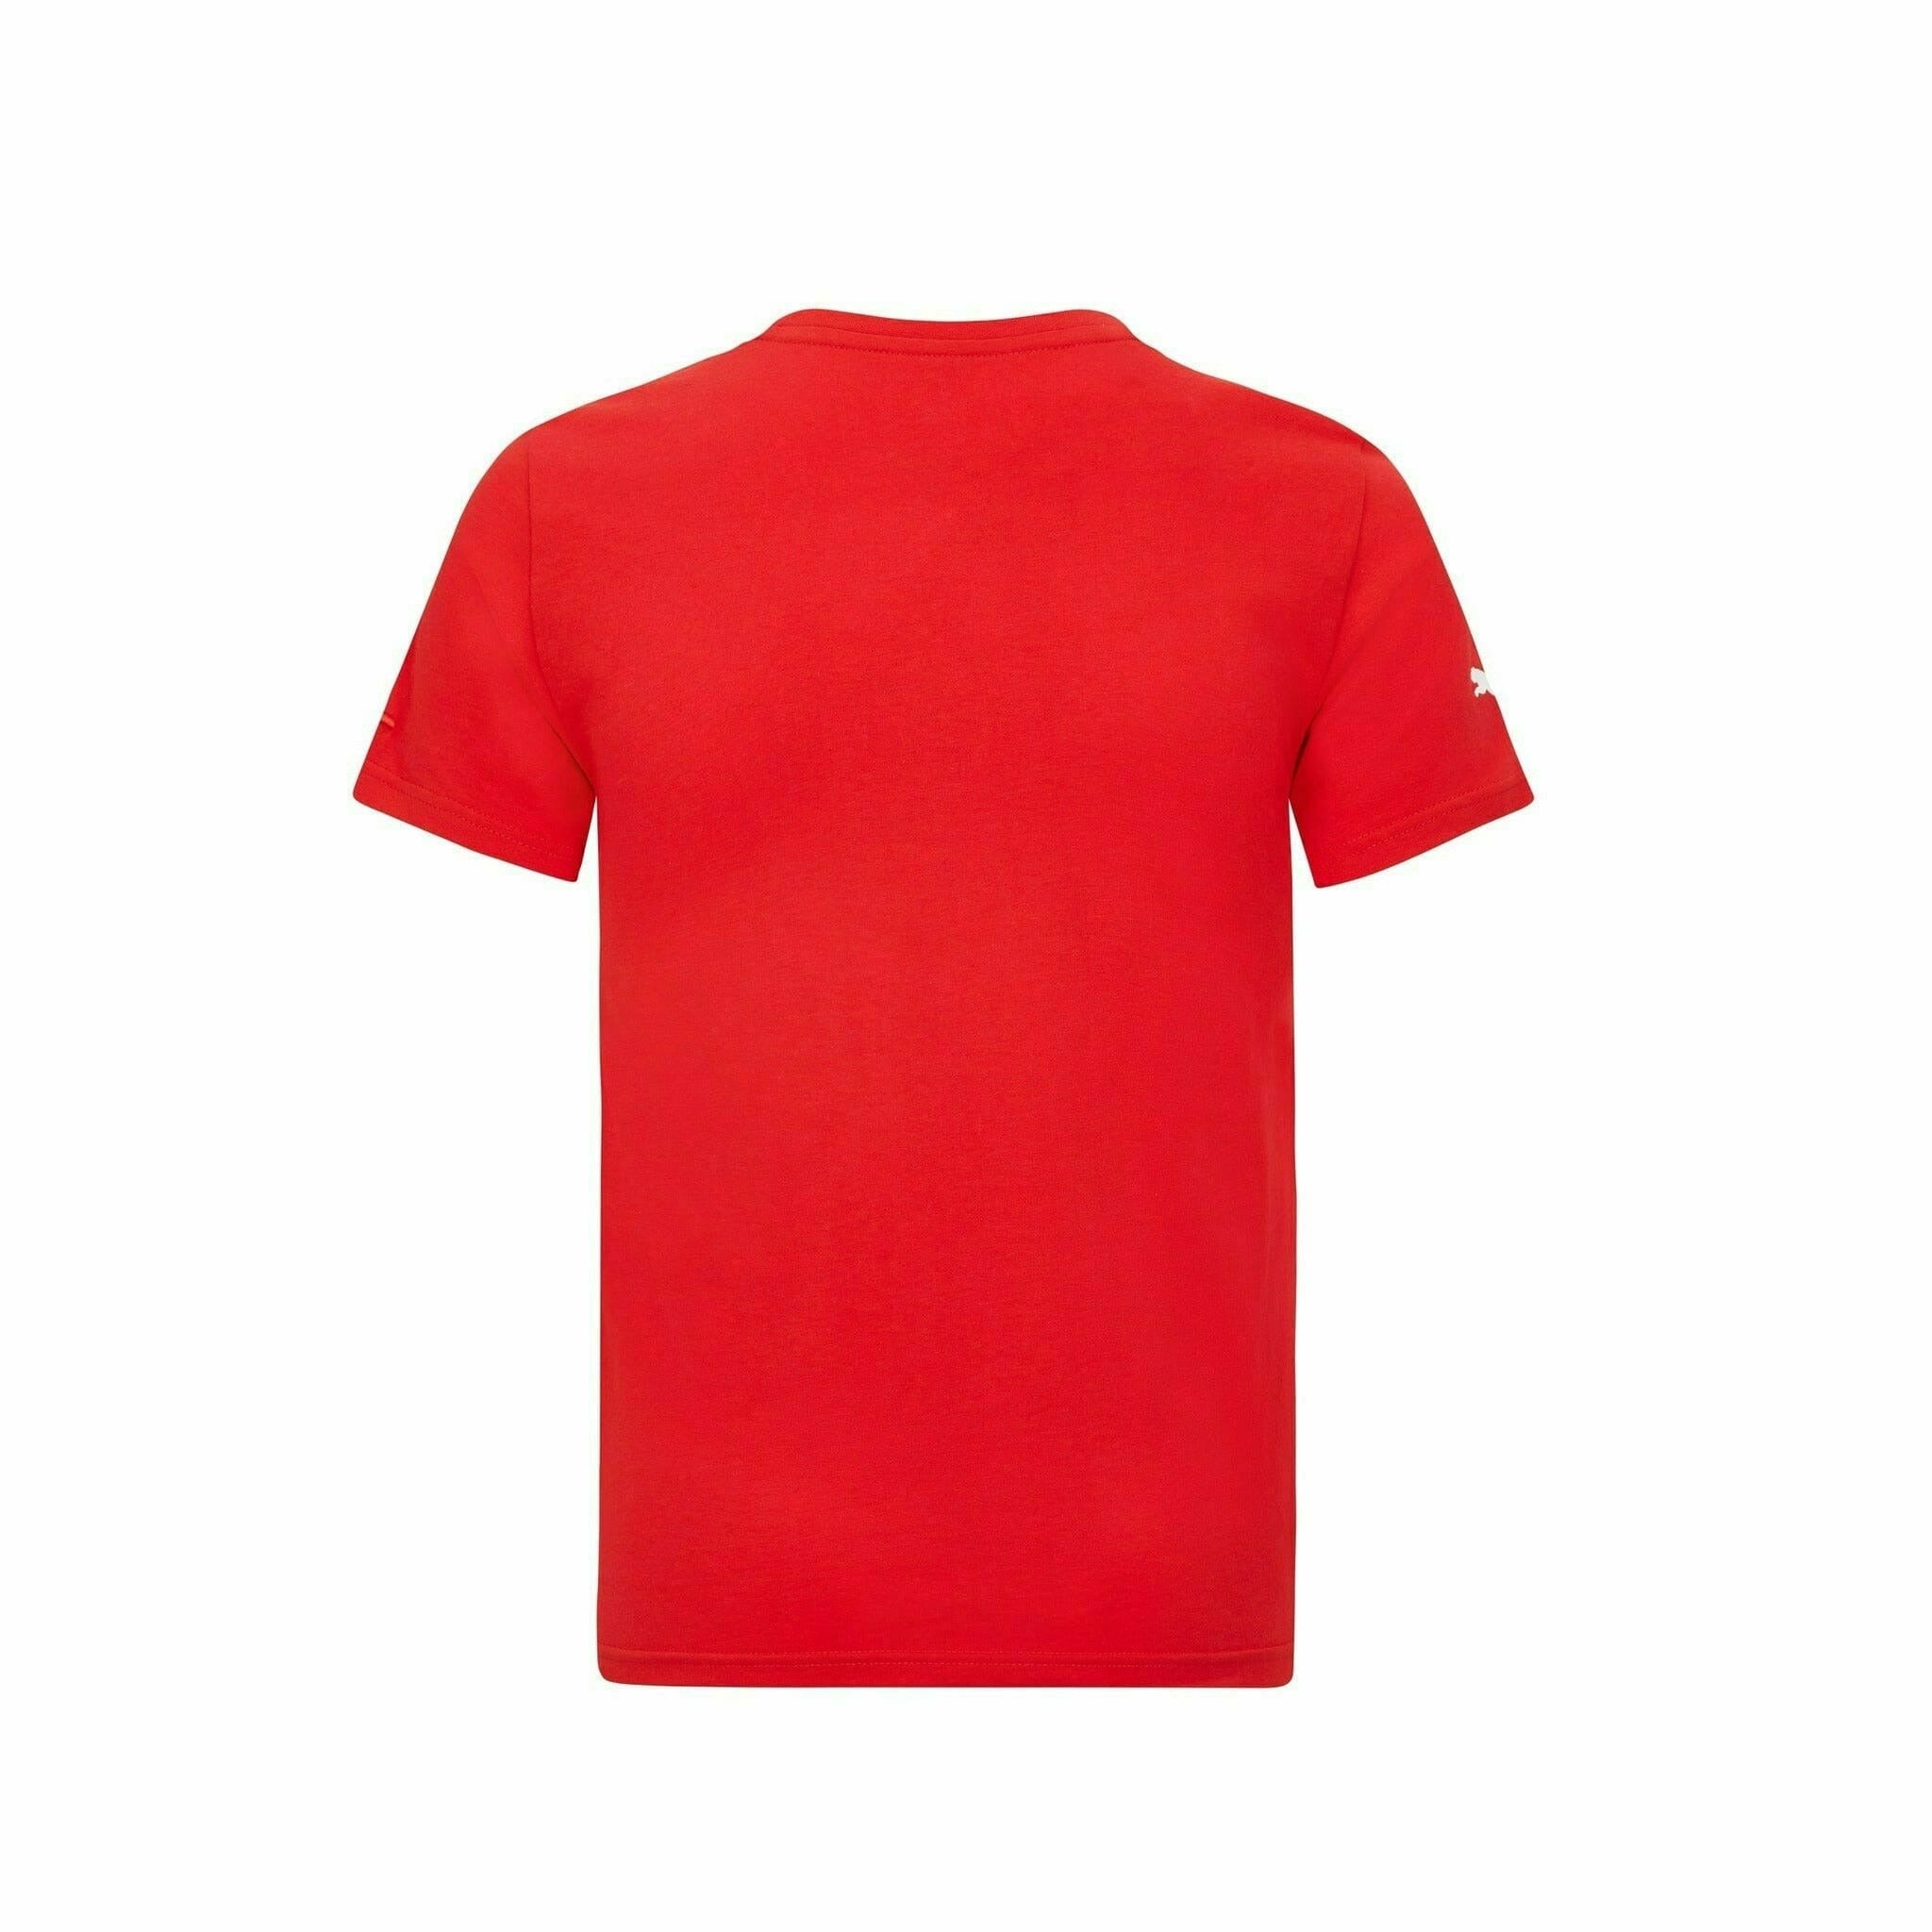 Ferrari Polo Shirt Casual | Cotton T Shirt | Embroidered Logo Auto Car |  Short Sleeve | Black Blue White Red | Mens Clothing Accessories